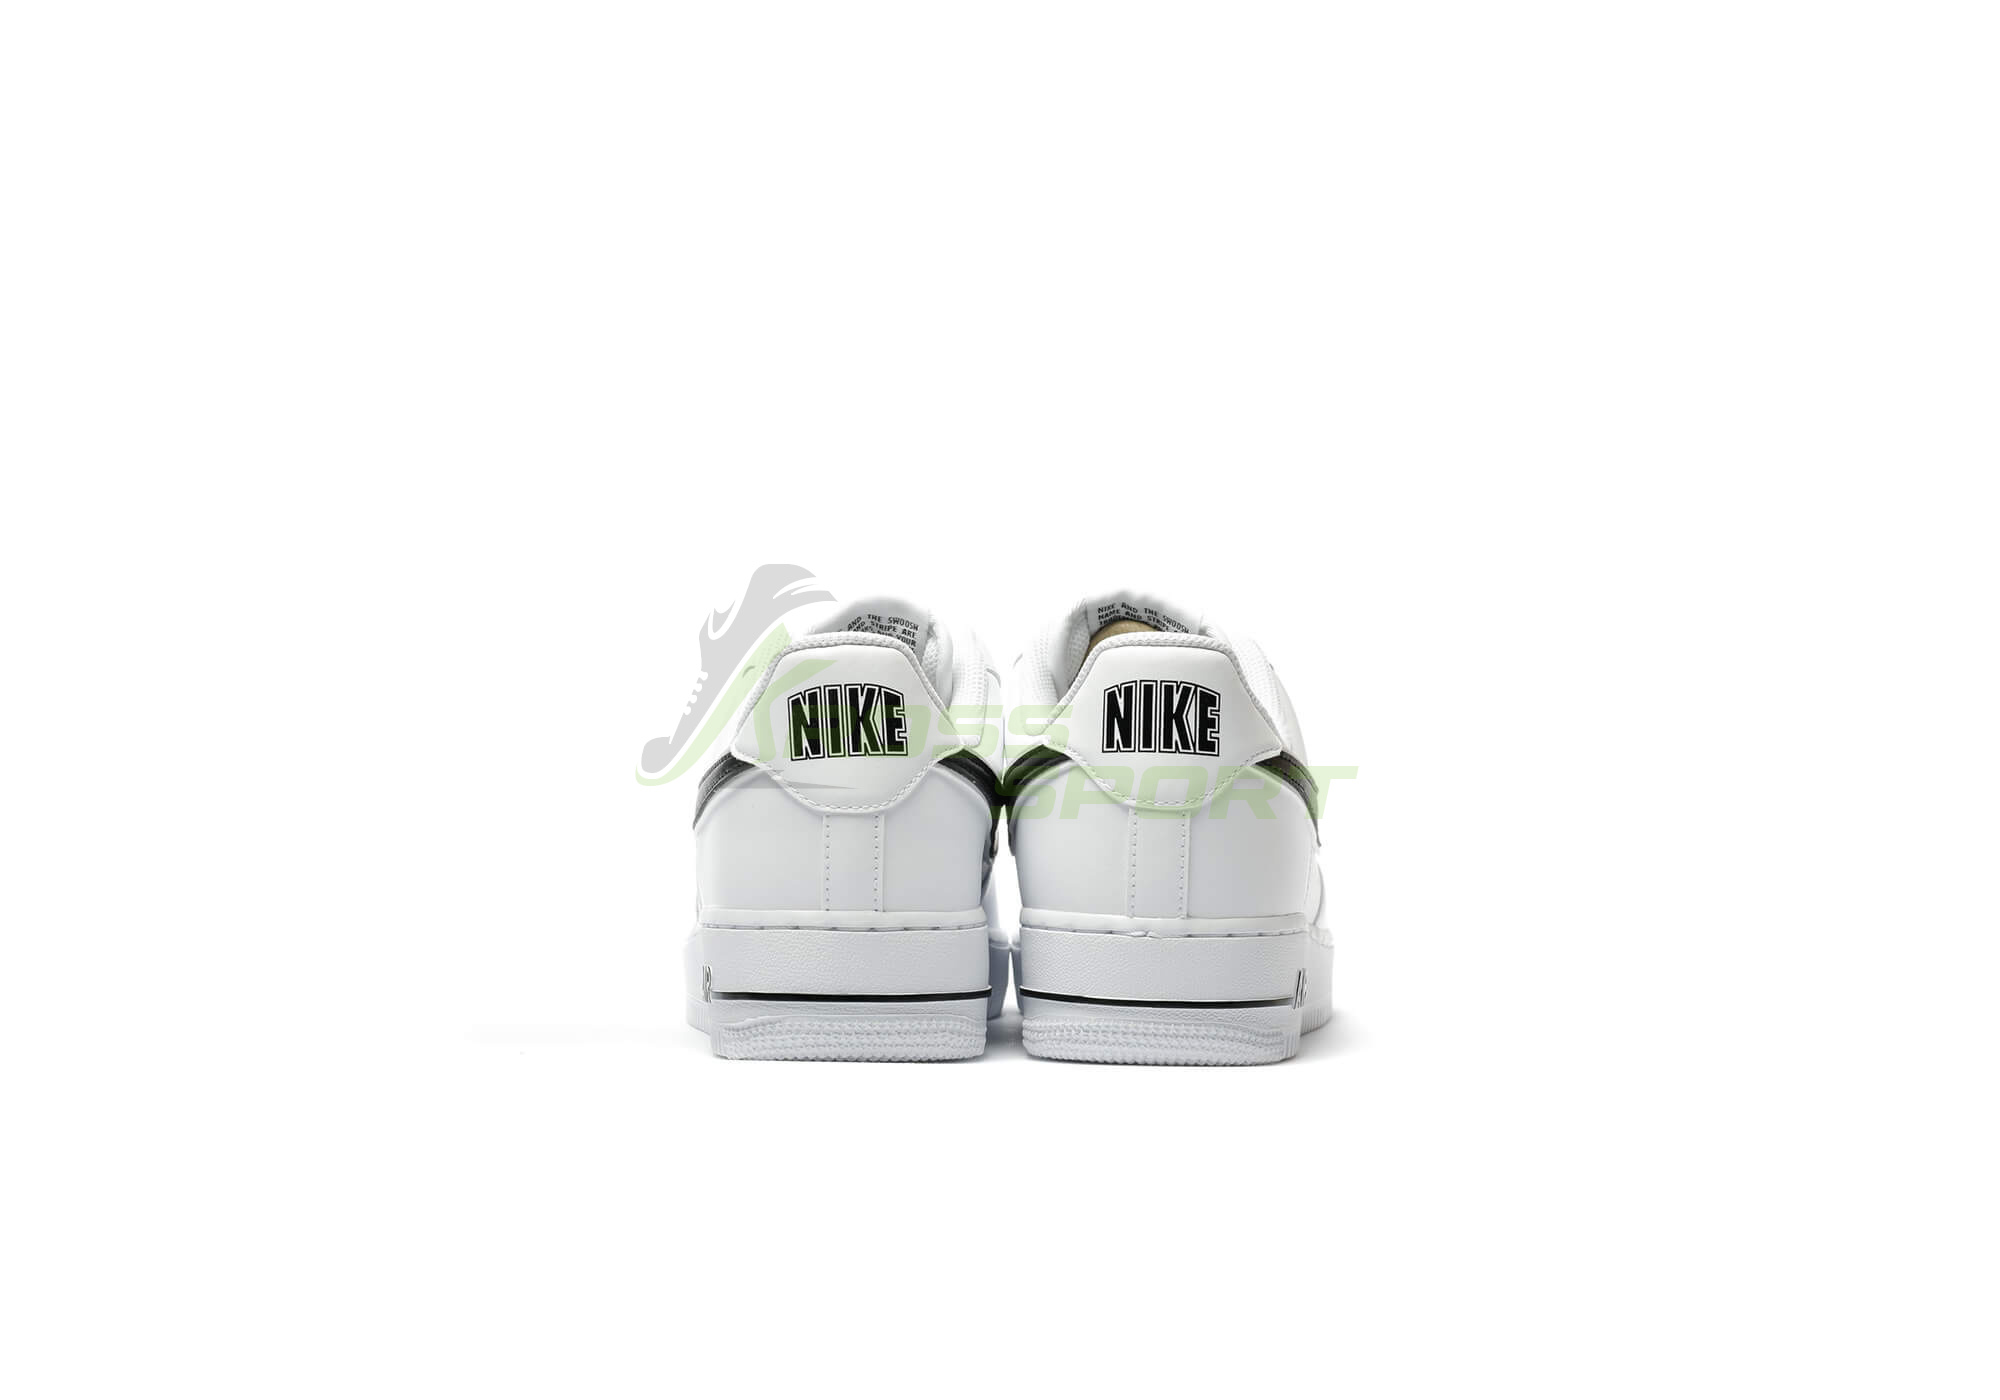  Nike Air Force 1 '07 White/Black